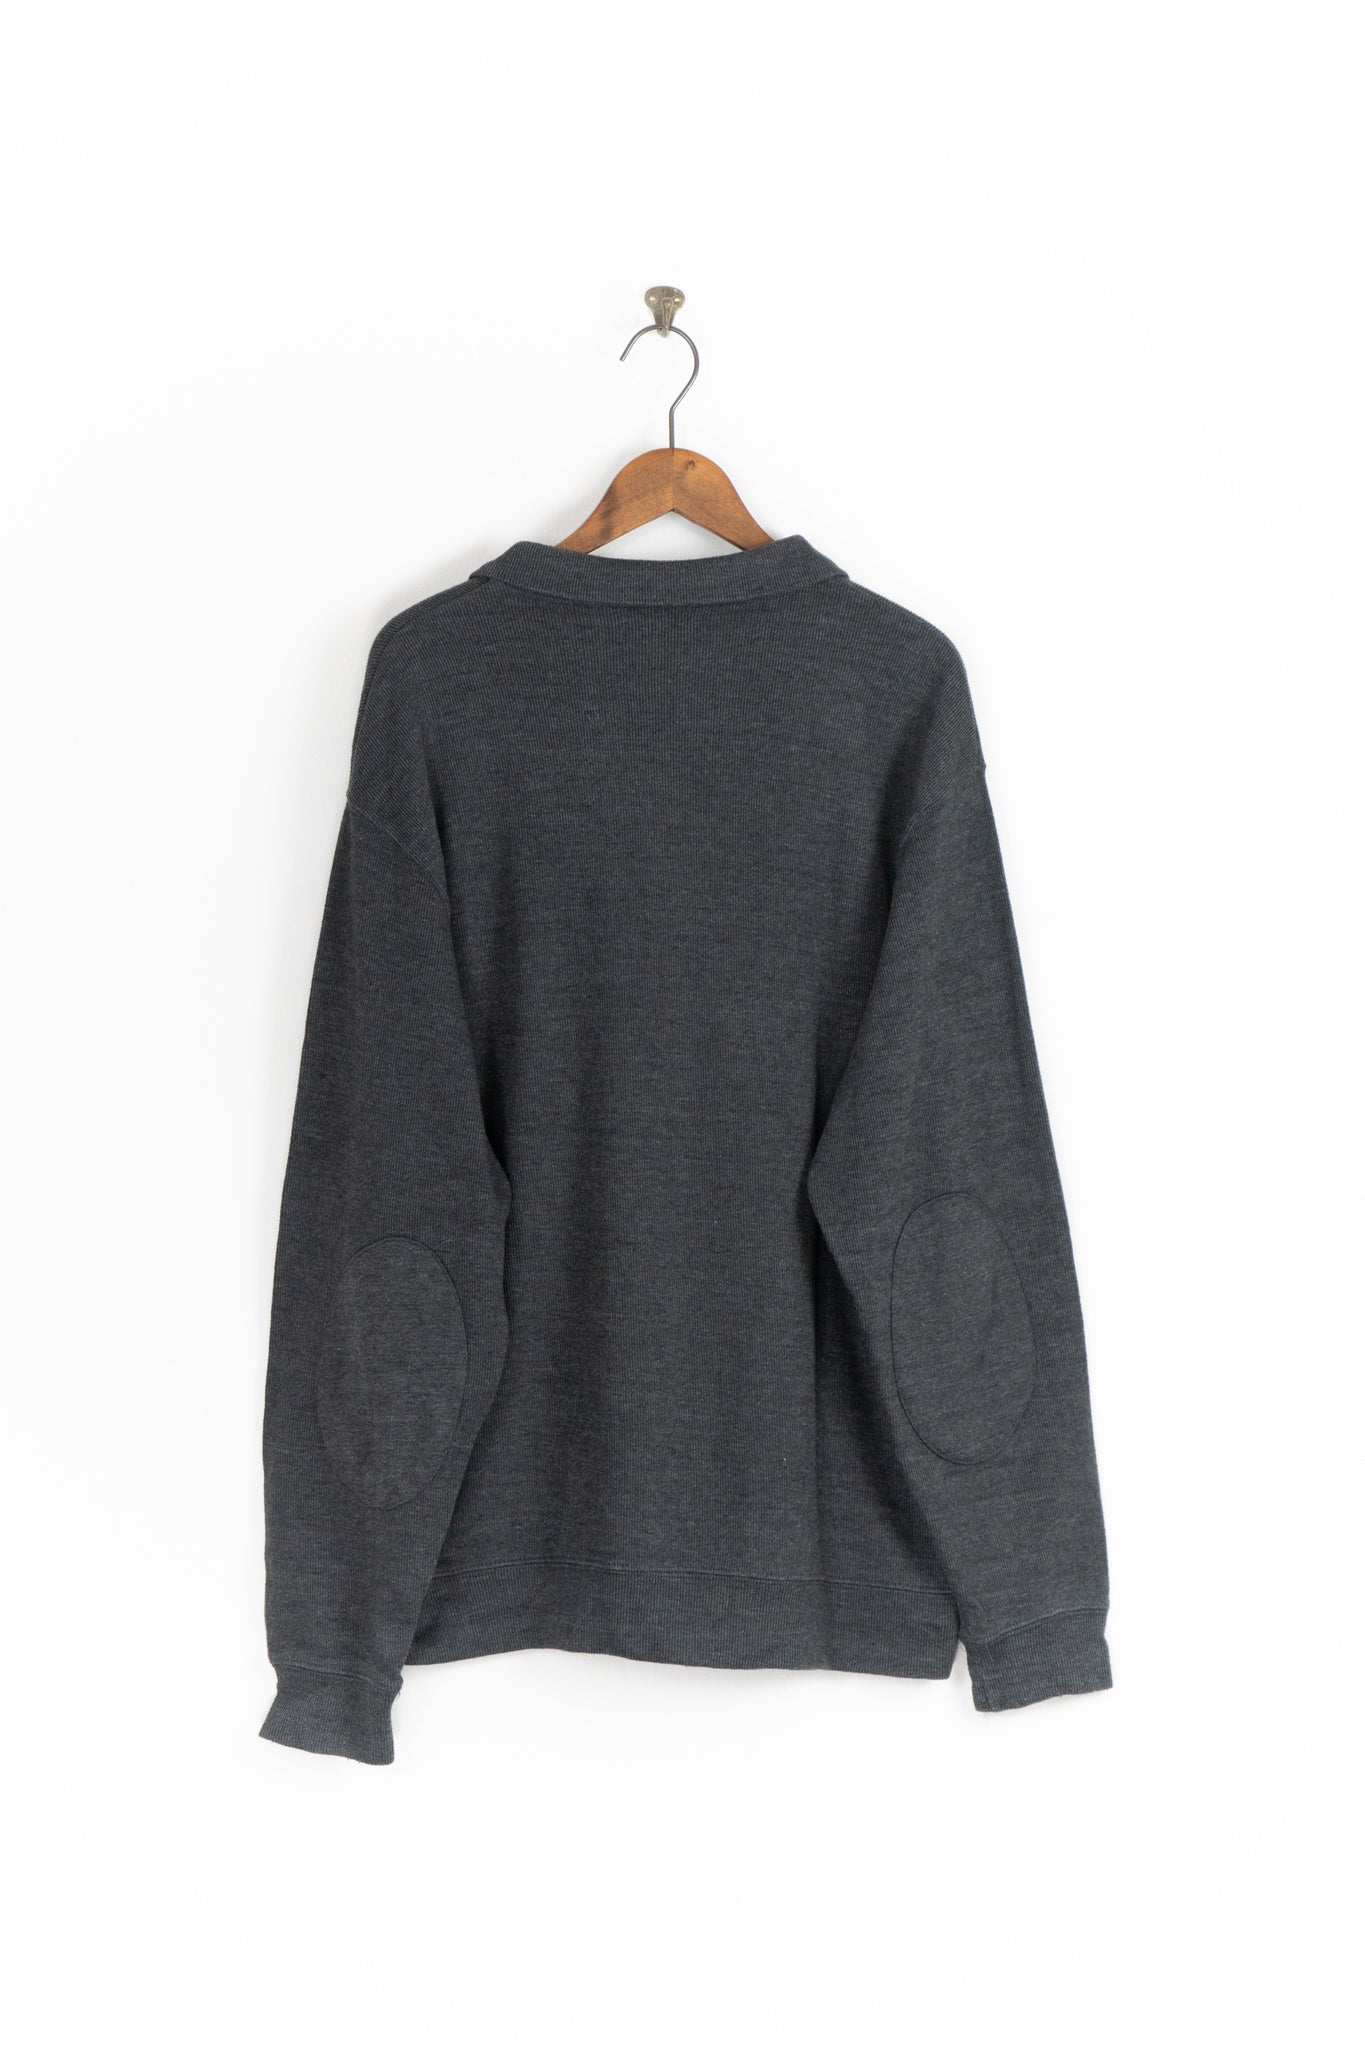 Pierre Cardin Stricksweater L/XL